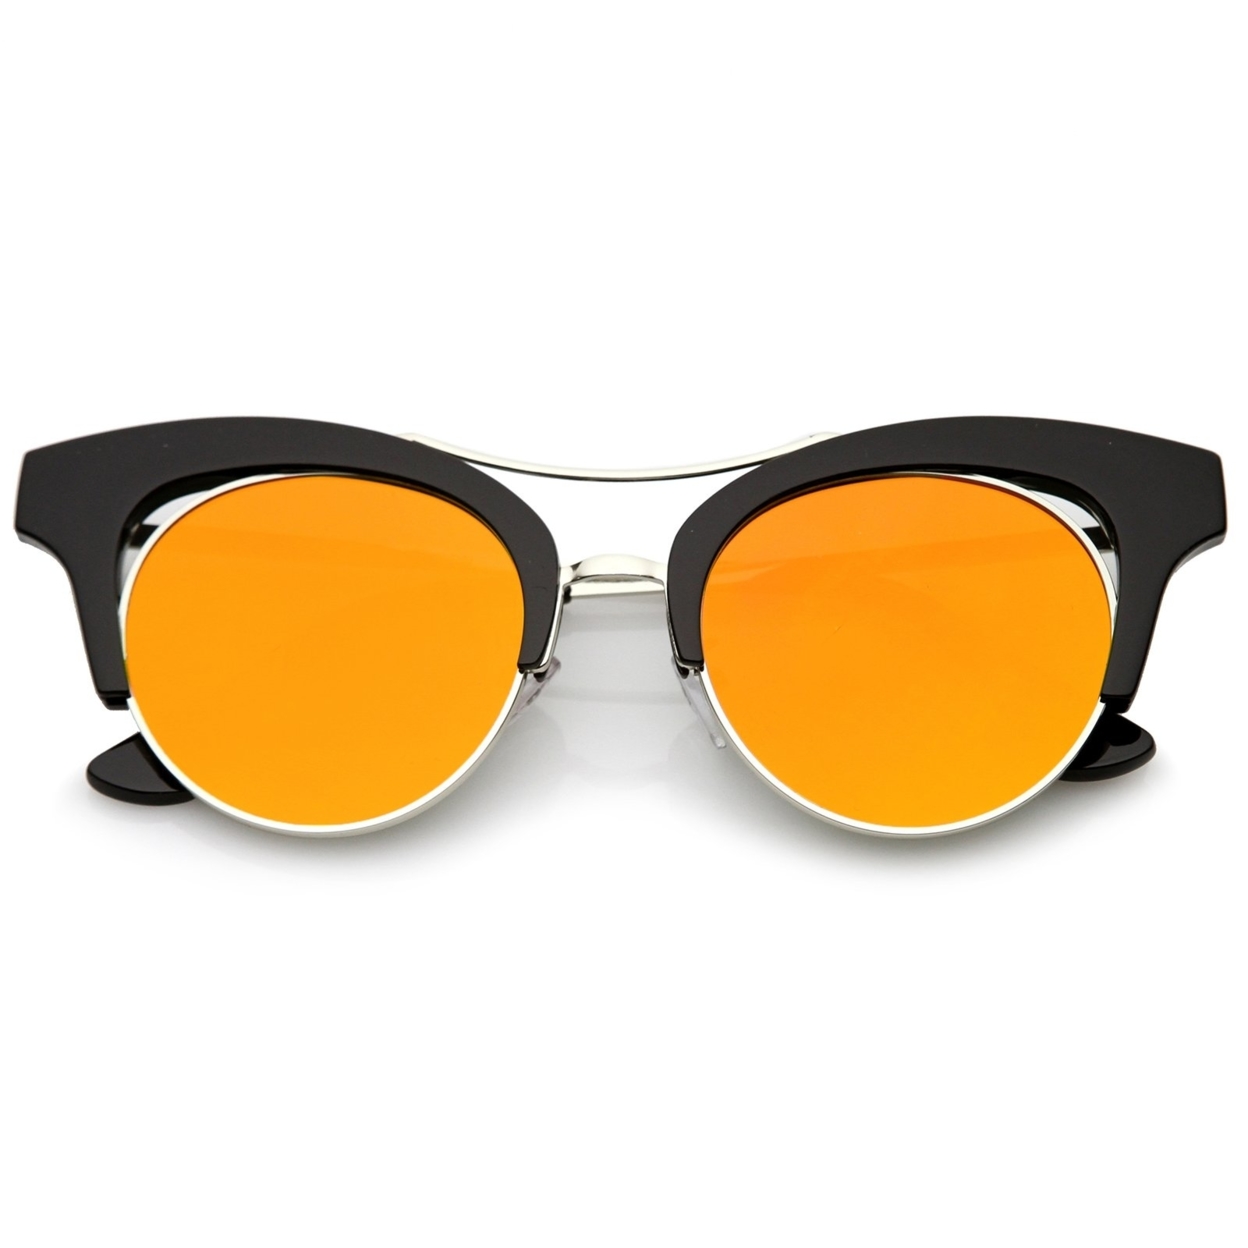 Women's Oversize Cutout Brow Bar Mirror Round Flat Lens Cat Eye Sunglasses 51mm - Black-Silver / Magenta Mirror